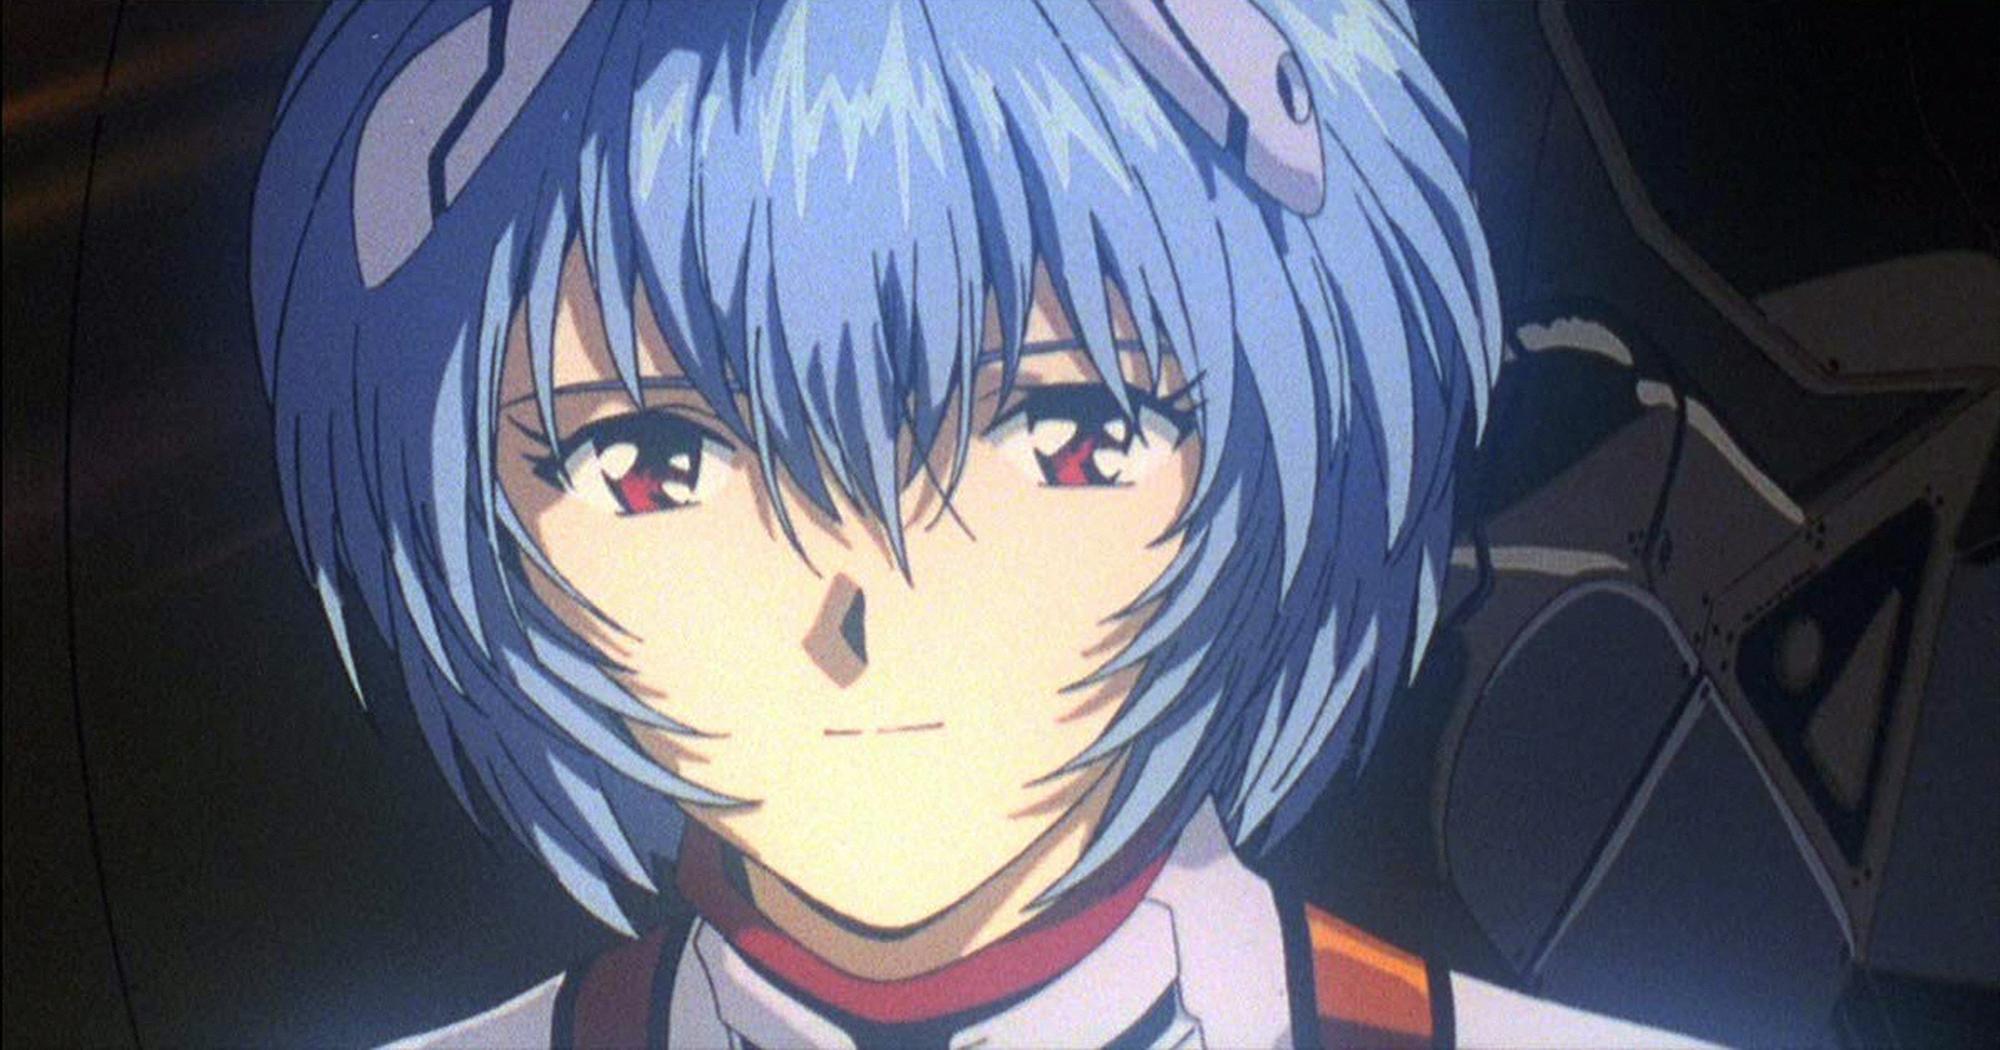 Le personnage de Rei dans la série "Neon Genesis Evangelion" de Yoshiyuki Sadamoto. [GAINAX - KADOKAWA SHOTEN PUBLISH / COLLECTION CHRISTOPHEL VIA AFP - GAINAX - KADOKAWA SHOTEN PUBLISH]